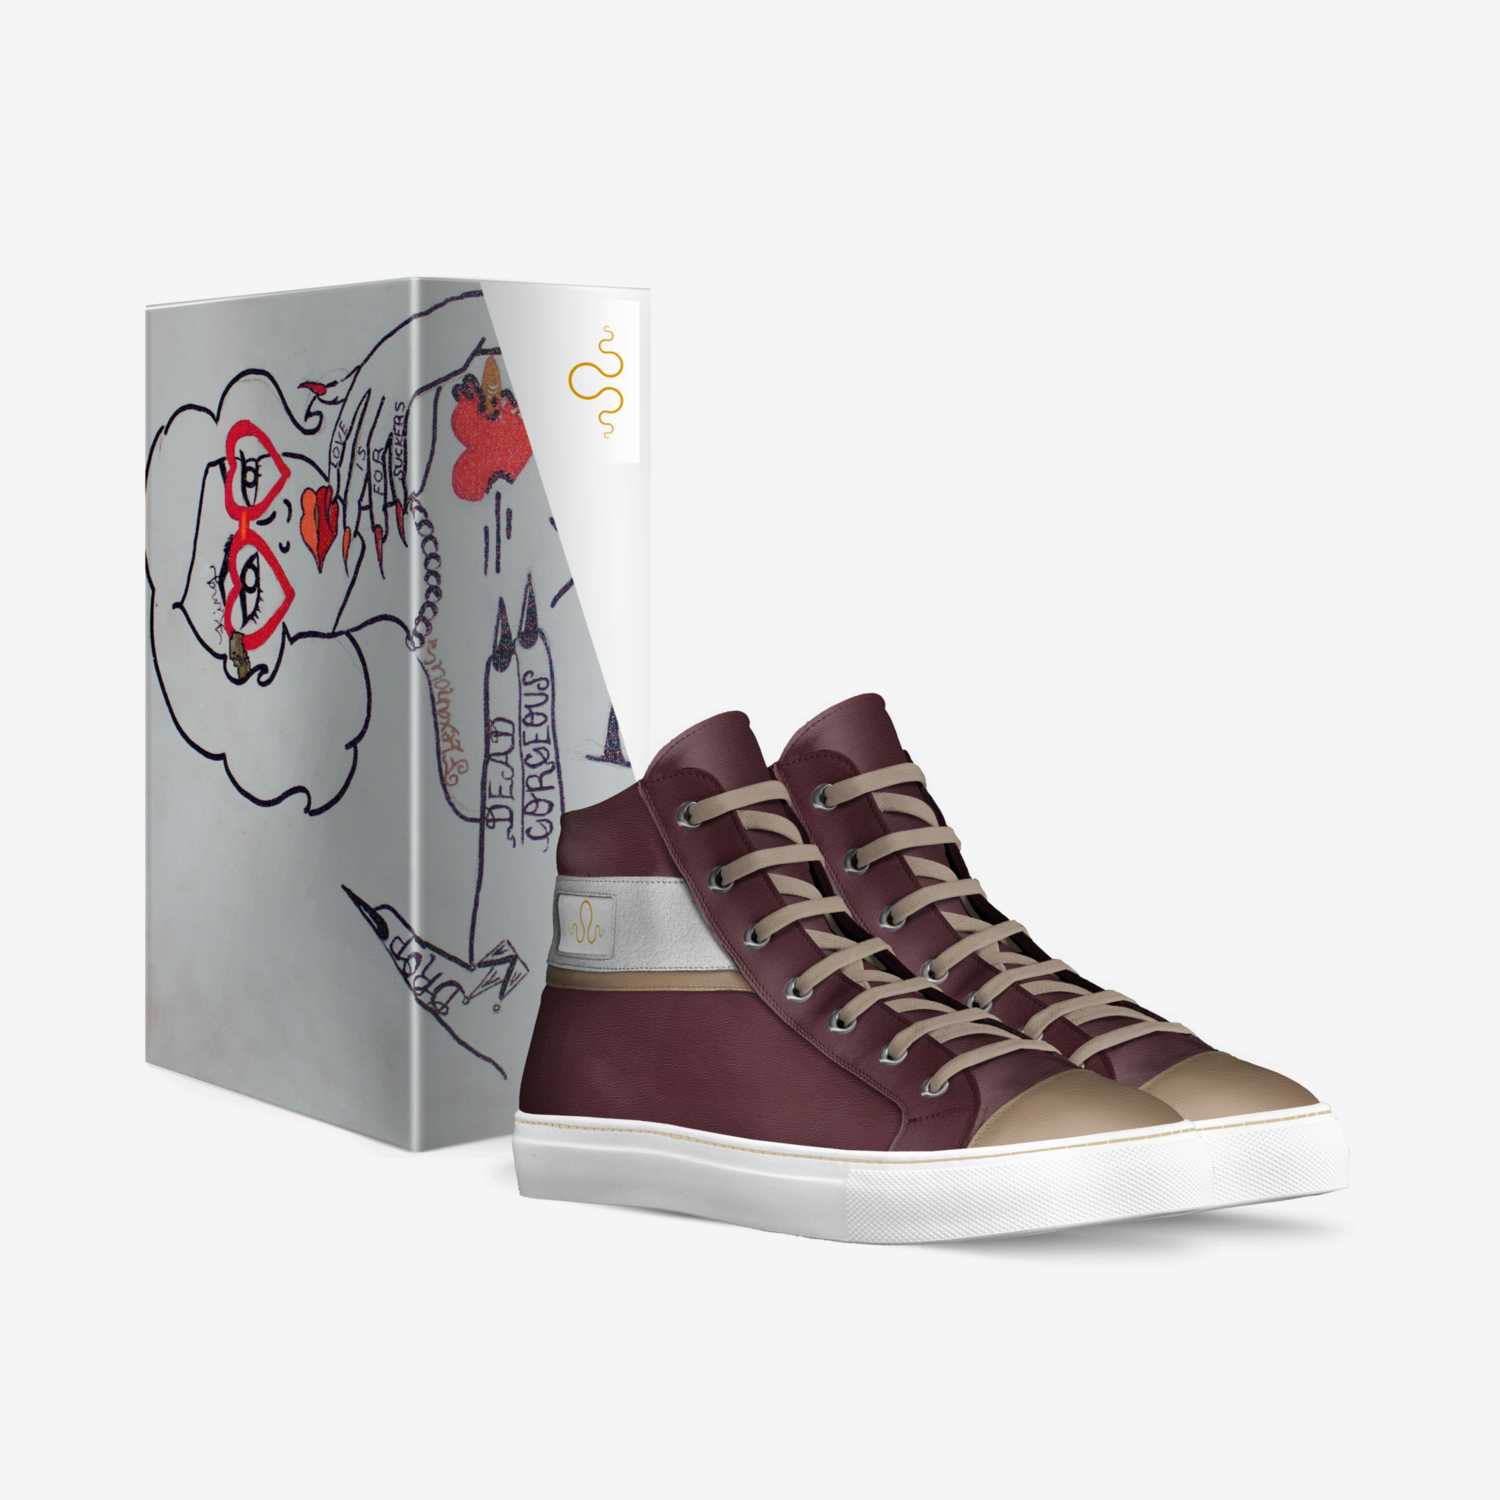 Kraken "B.A.B" custom made in Italy shoes by Carlos Segarra | Box view